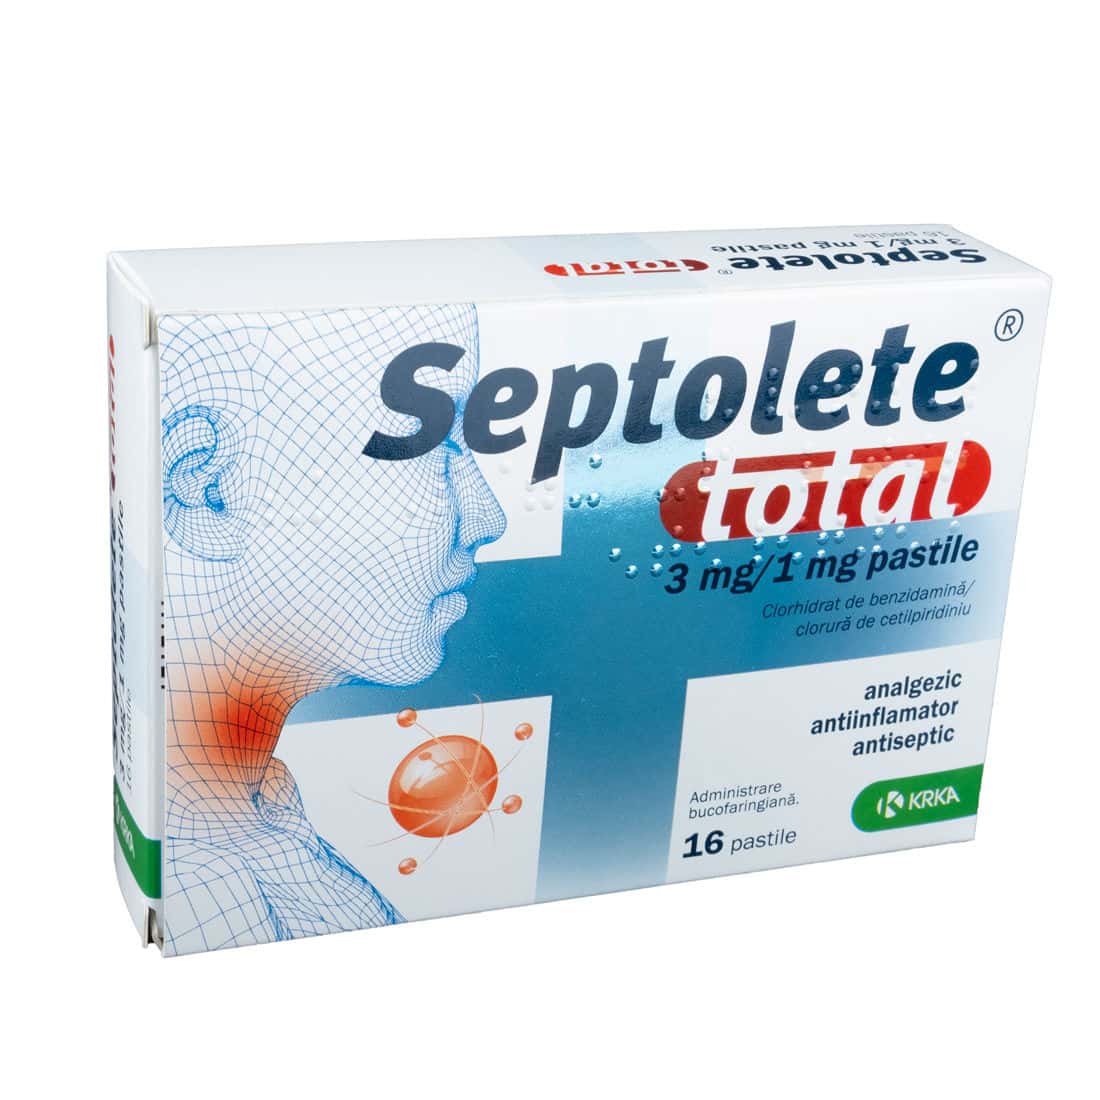 Septolete total 3mg/1mg pastile N8x2